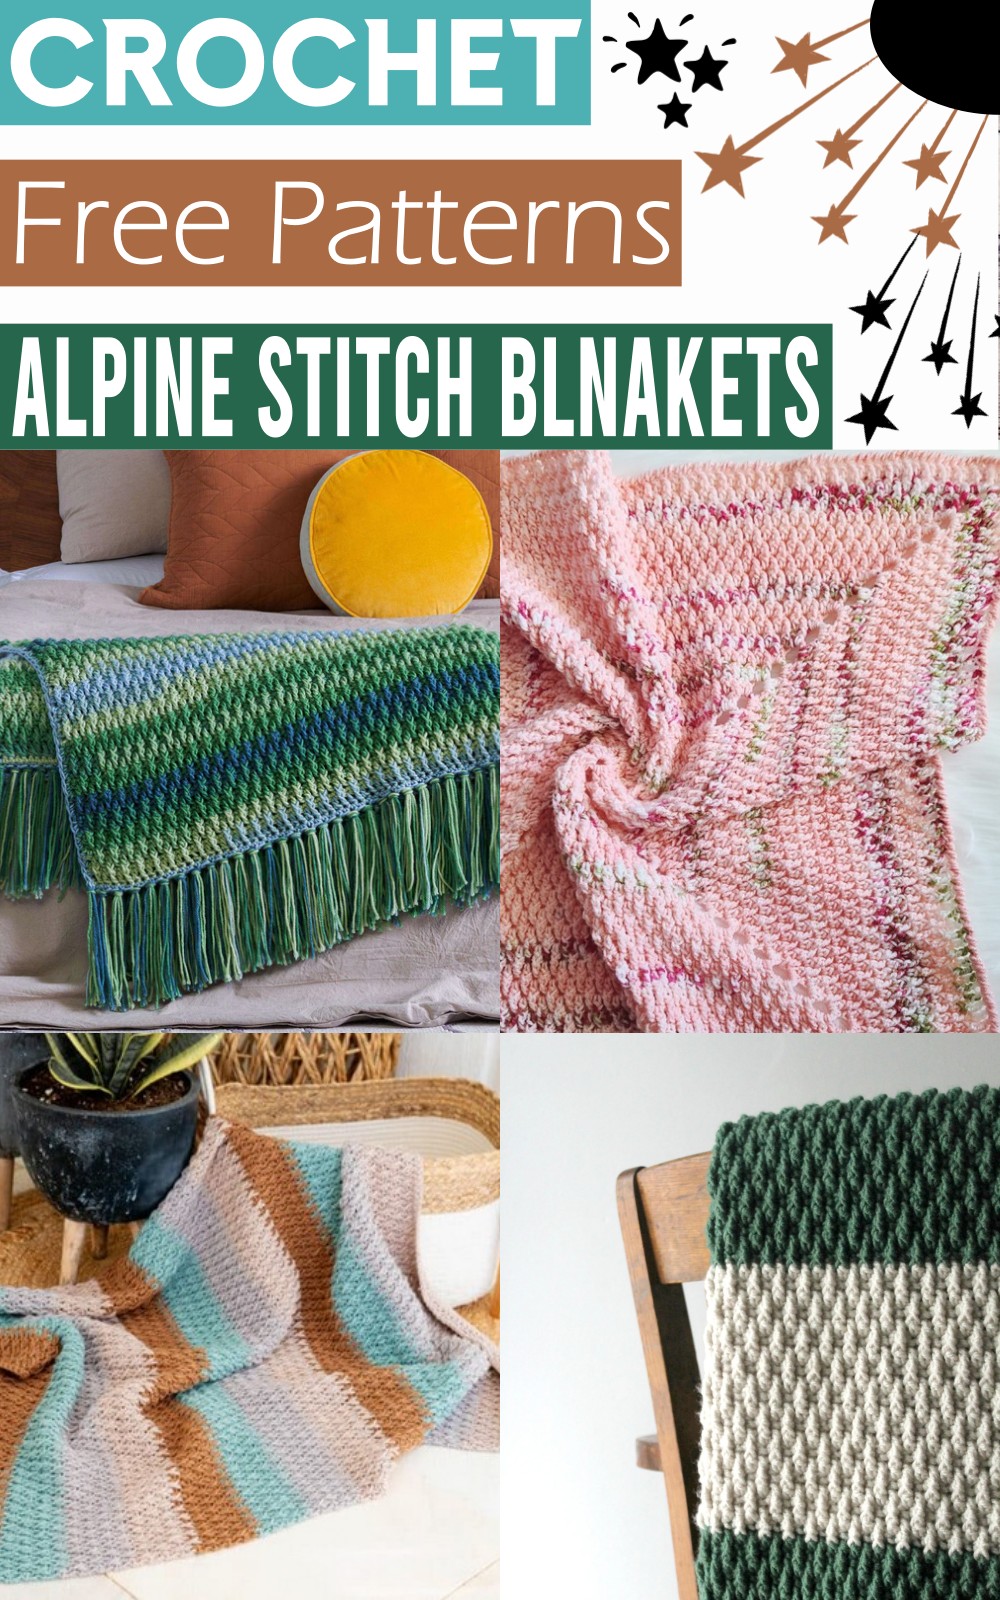 Alpine Stitch Crochet Blnakets Patterns